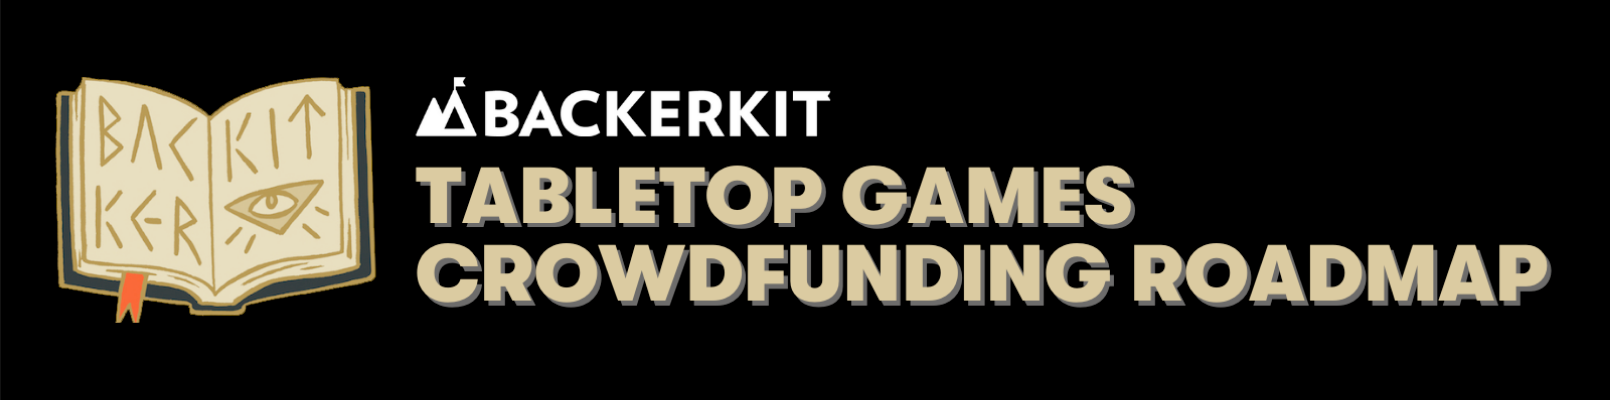 Tabletop Games Crowdfunding Roadmap